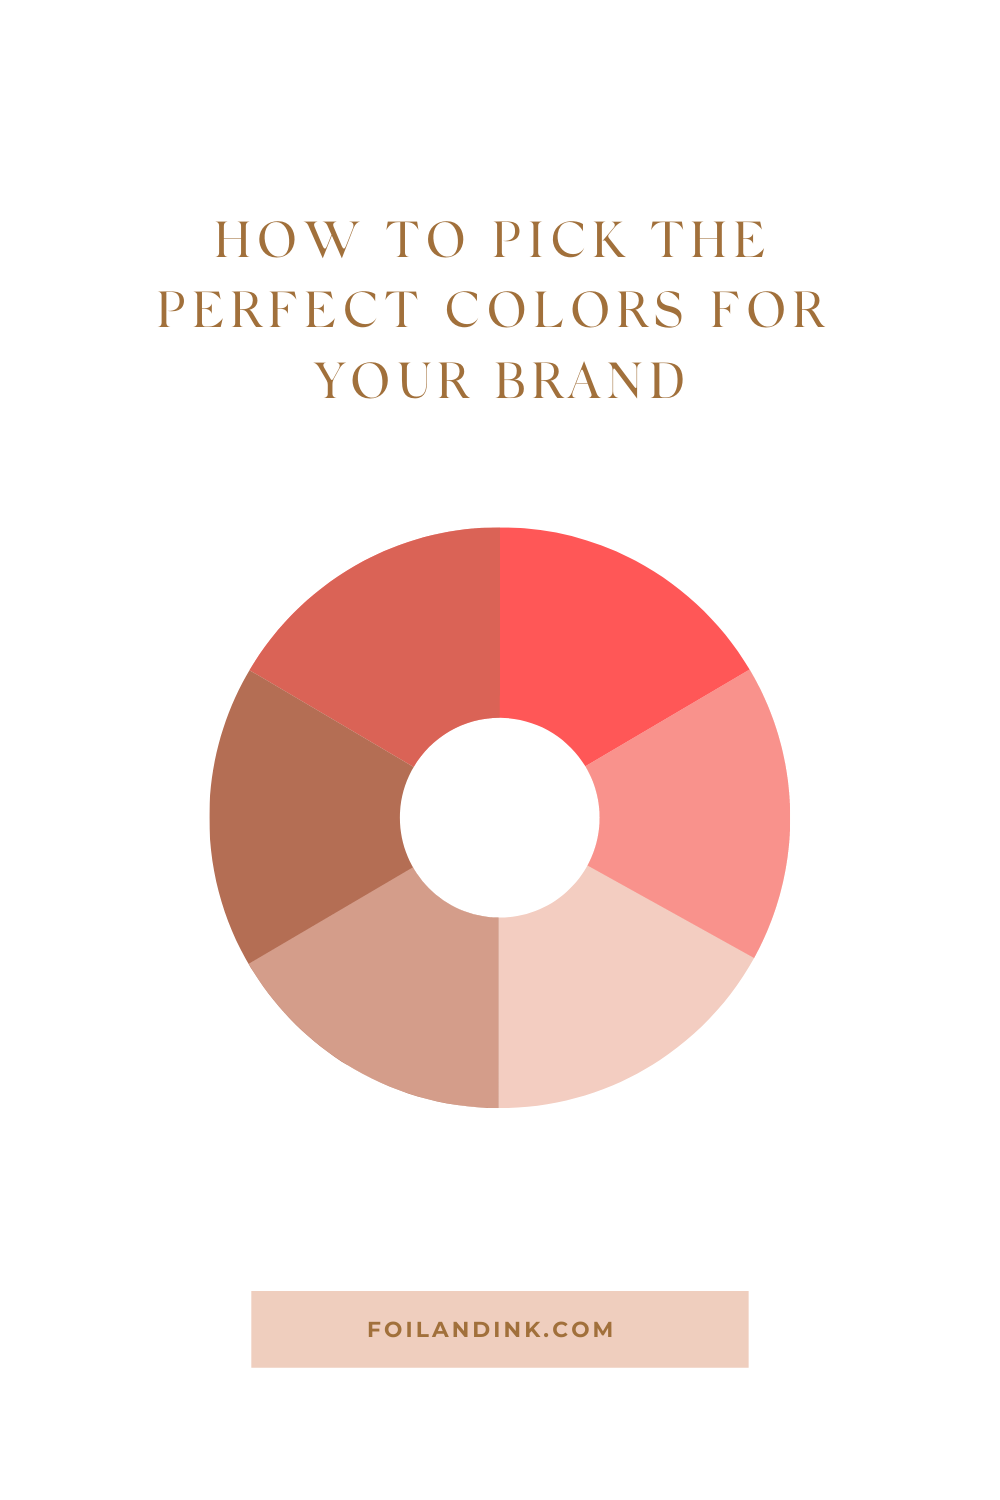 http://foilandink.com/wp-content/uploads/2020/07/how-to-choose-brand-colors.png